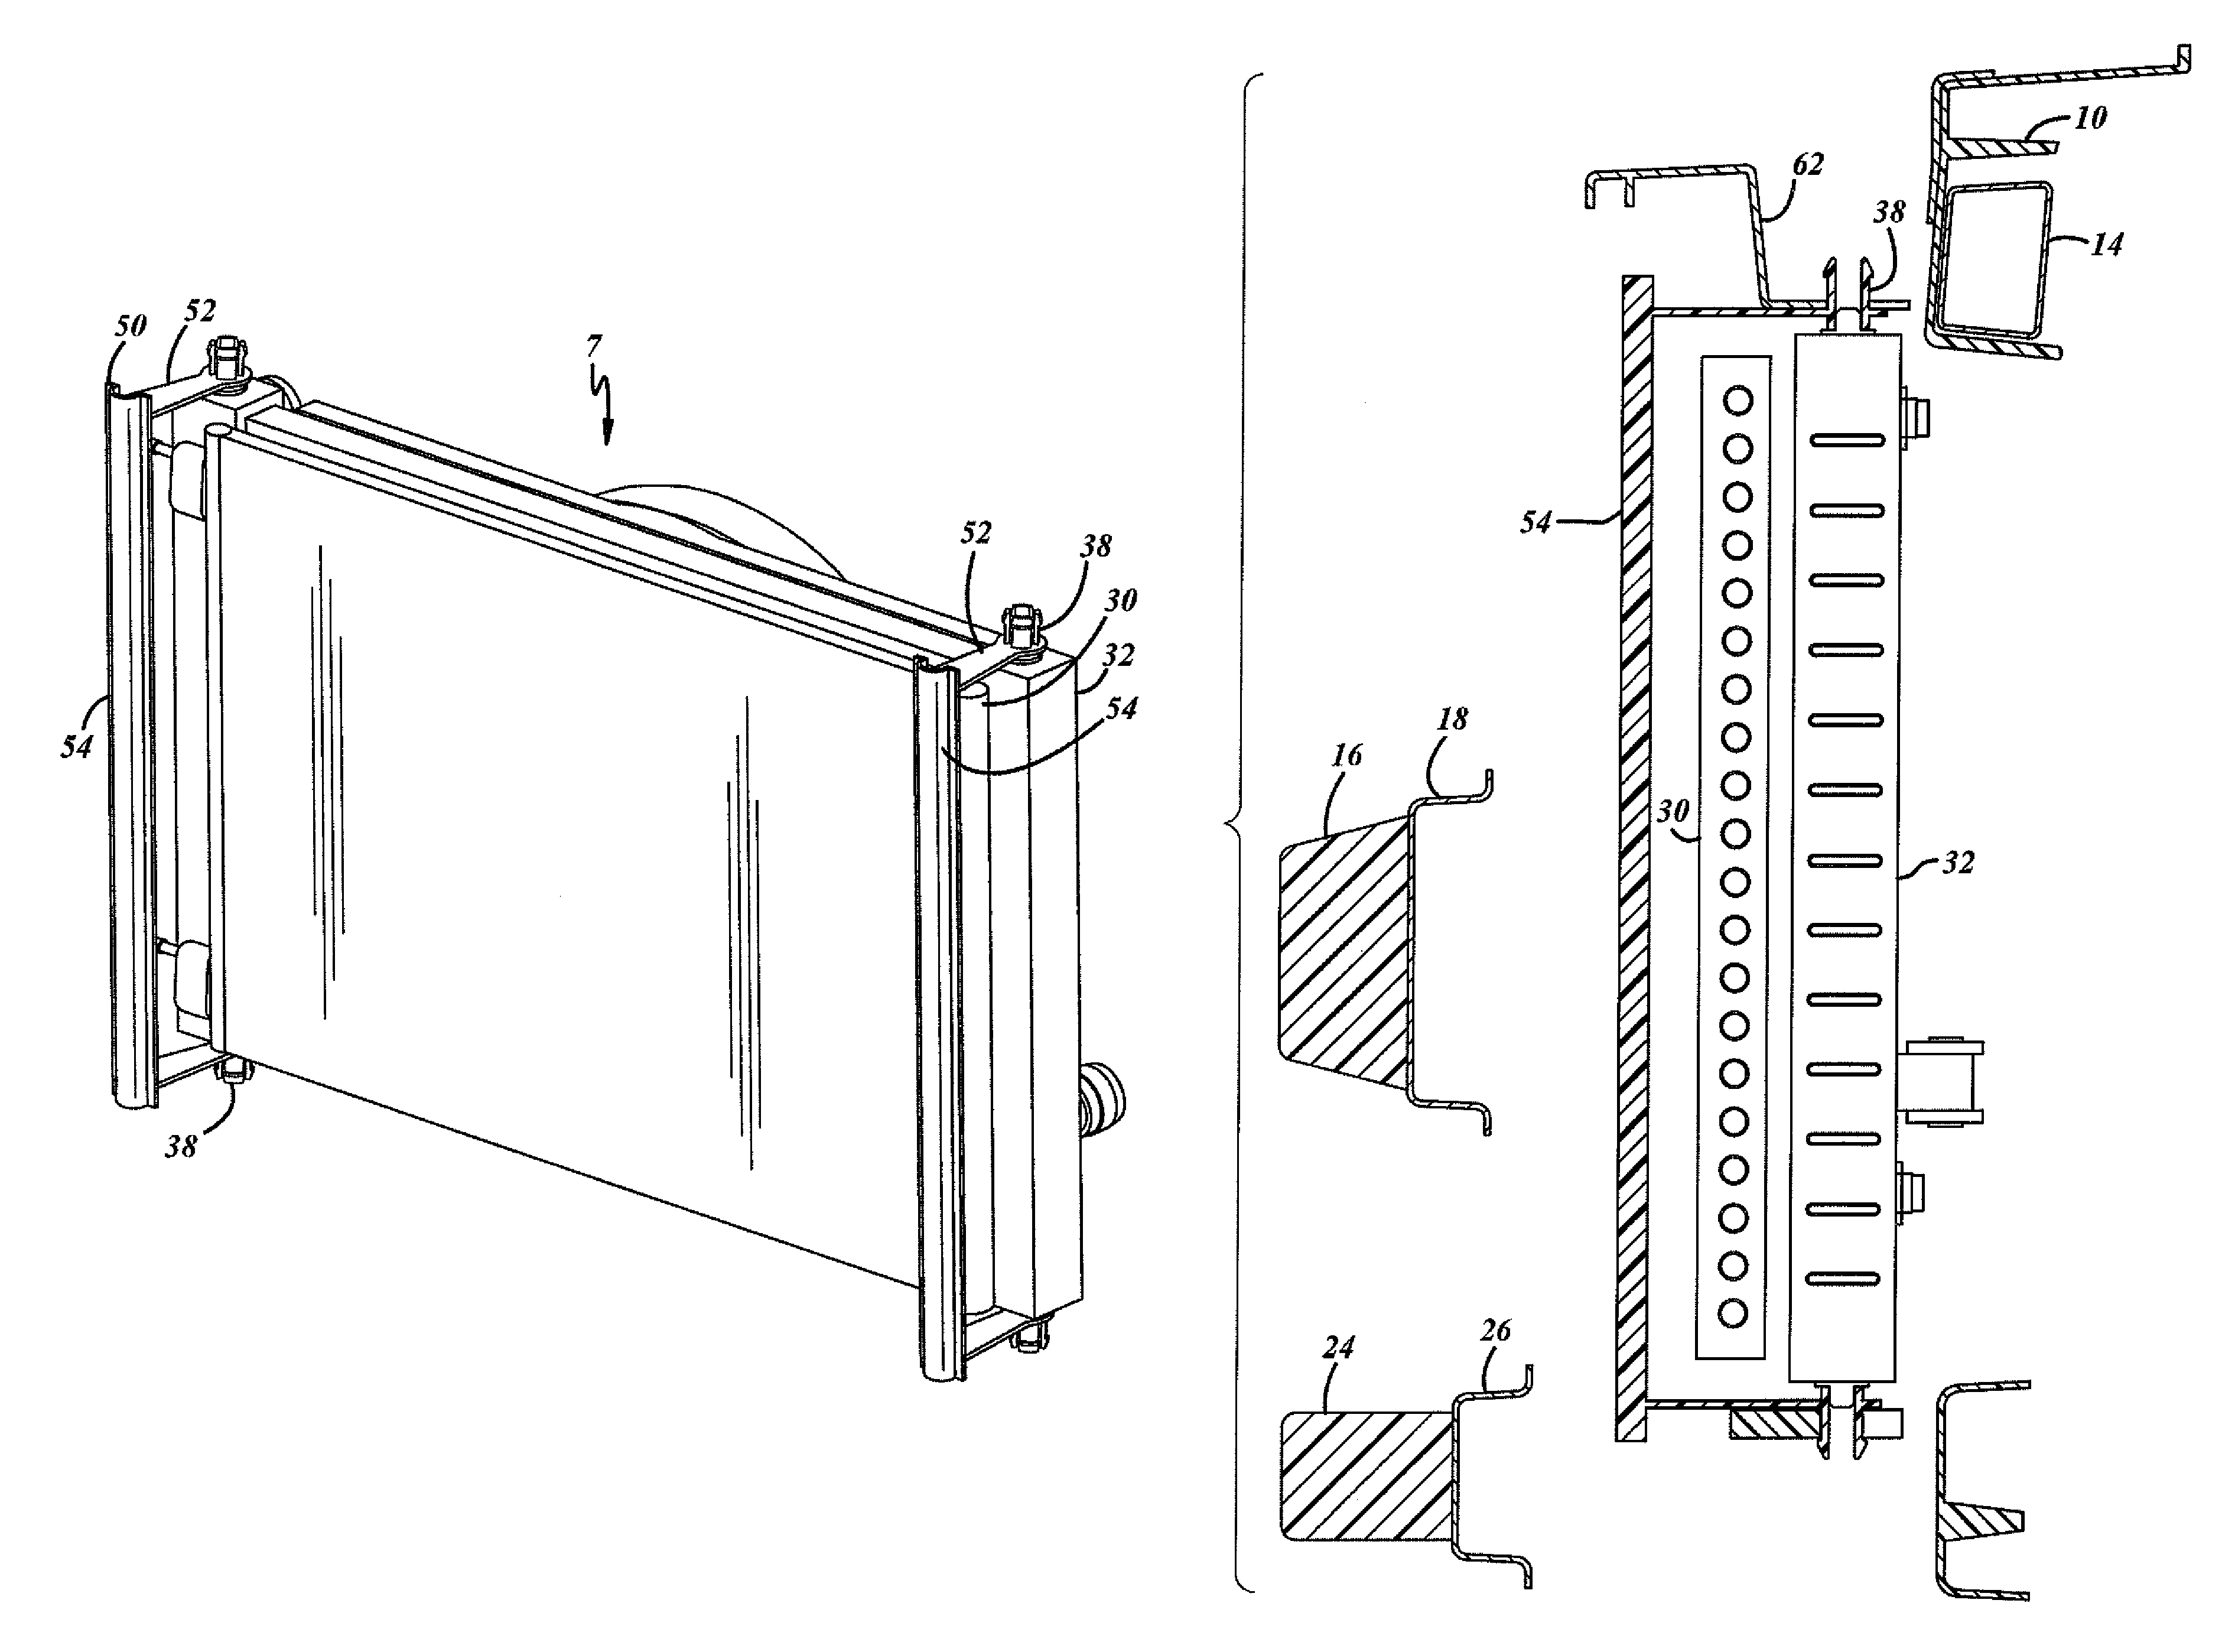 Front end module with breakaway radiator